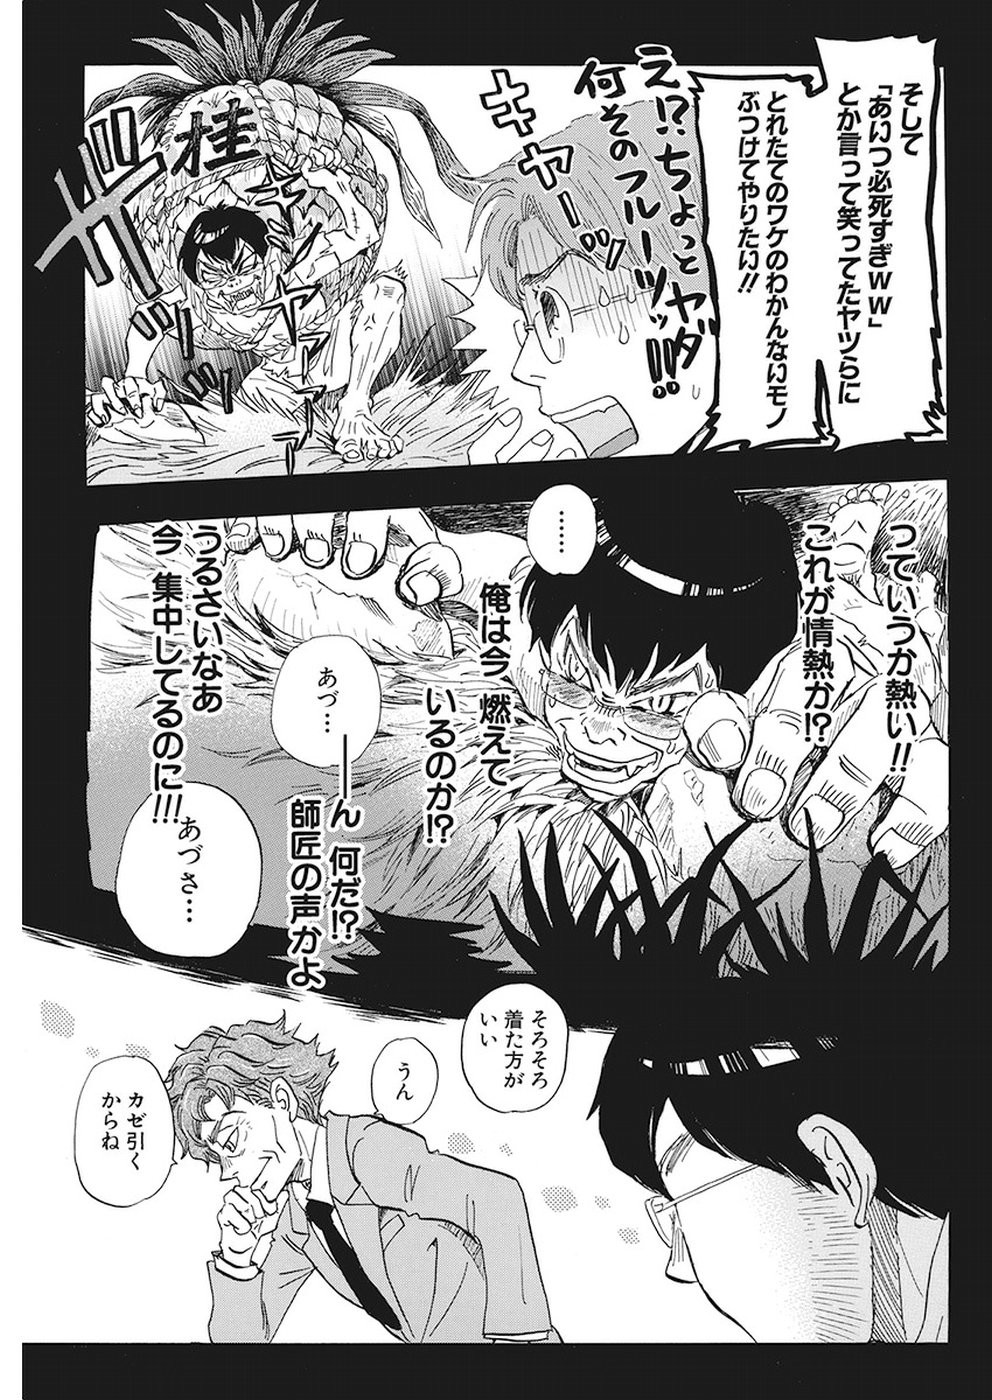 3 Gatsu no Lion - Chapter 159 - Page 5